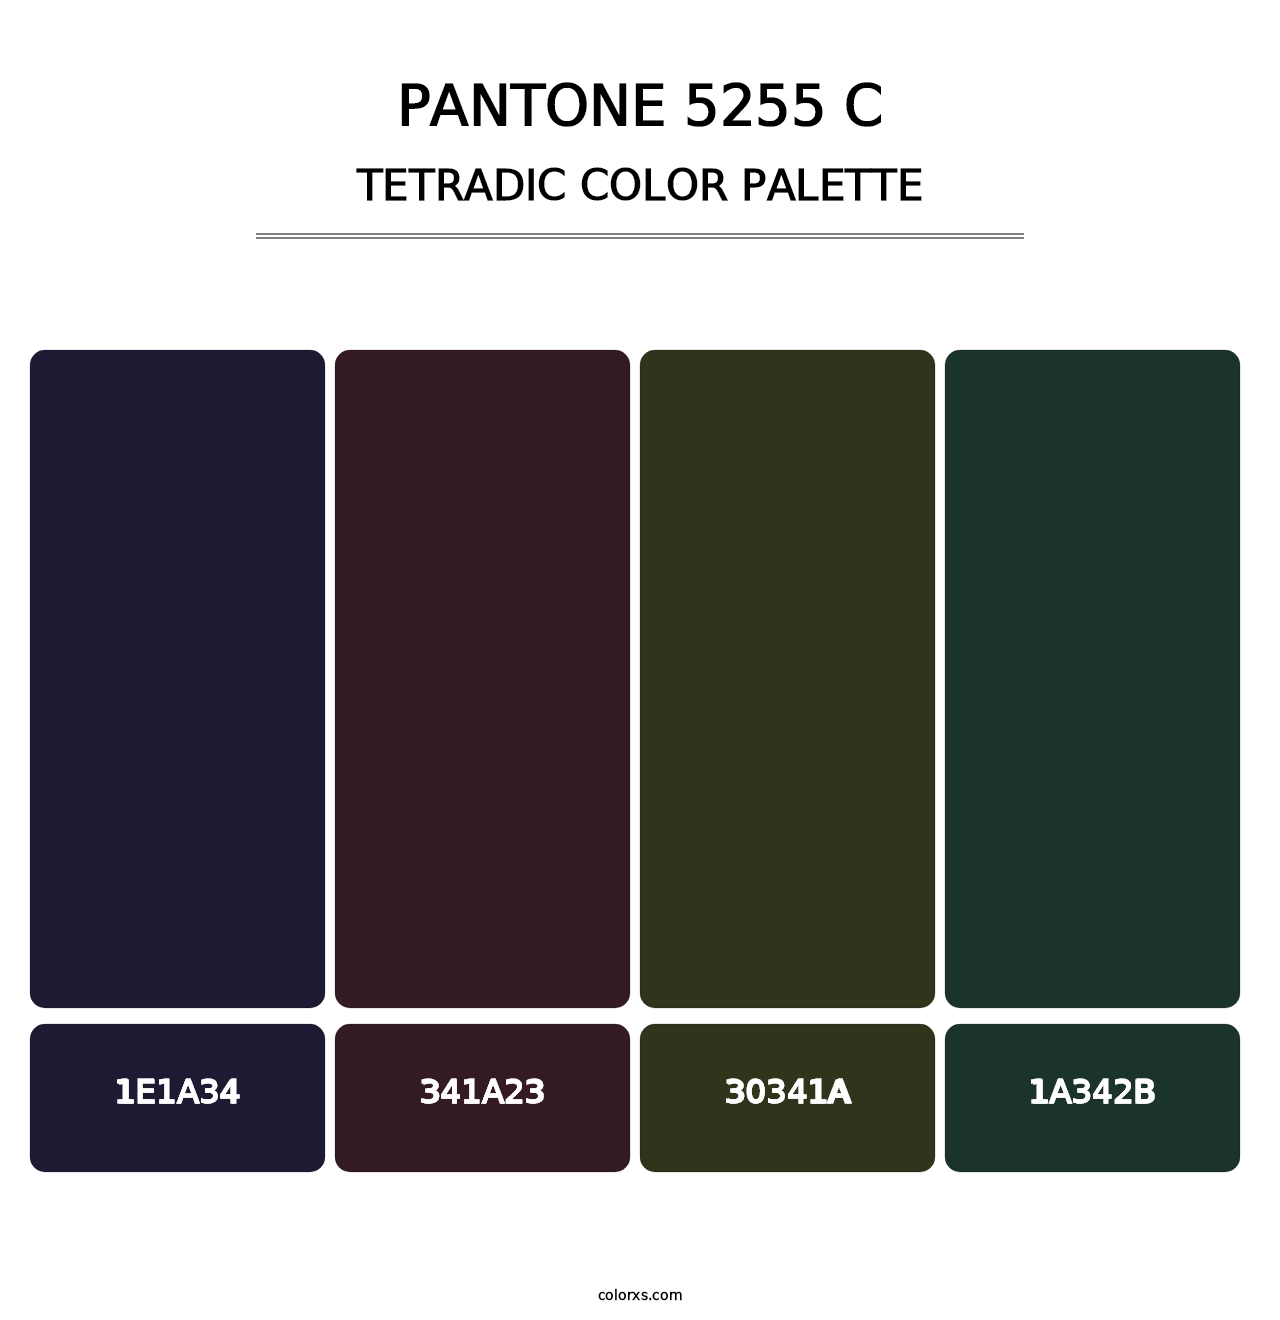 PANTONE 5255 C - Tetradic Color Palette